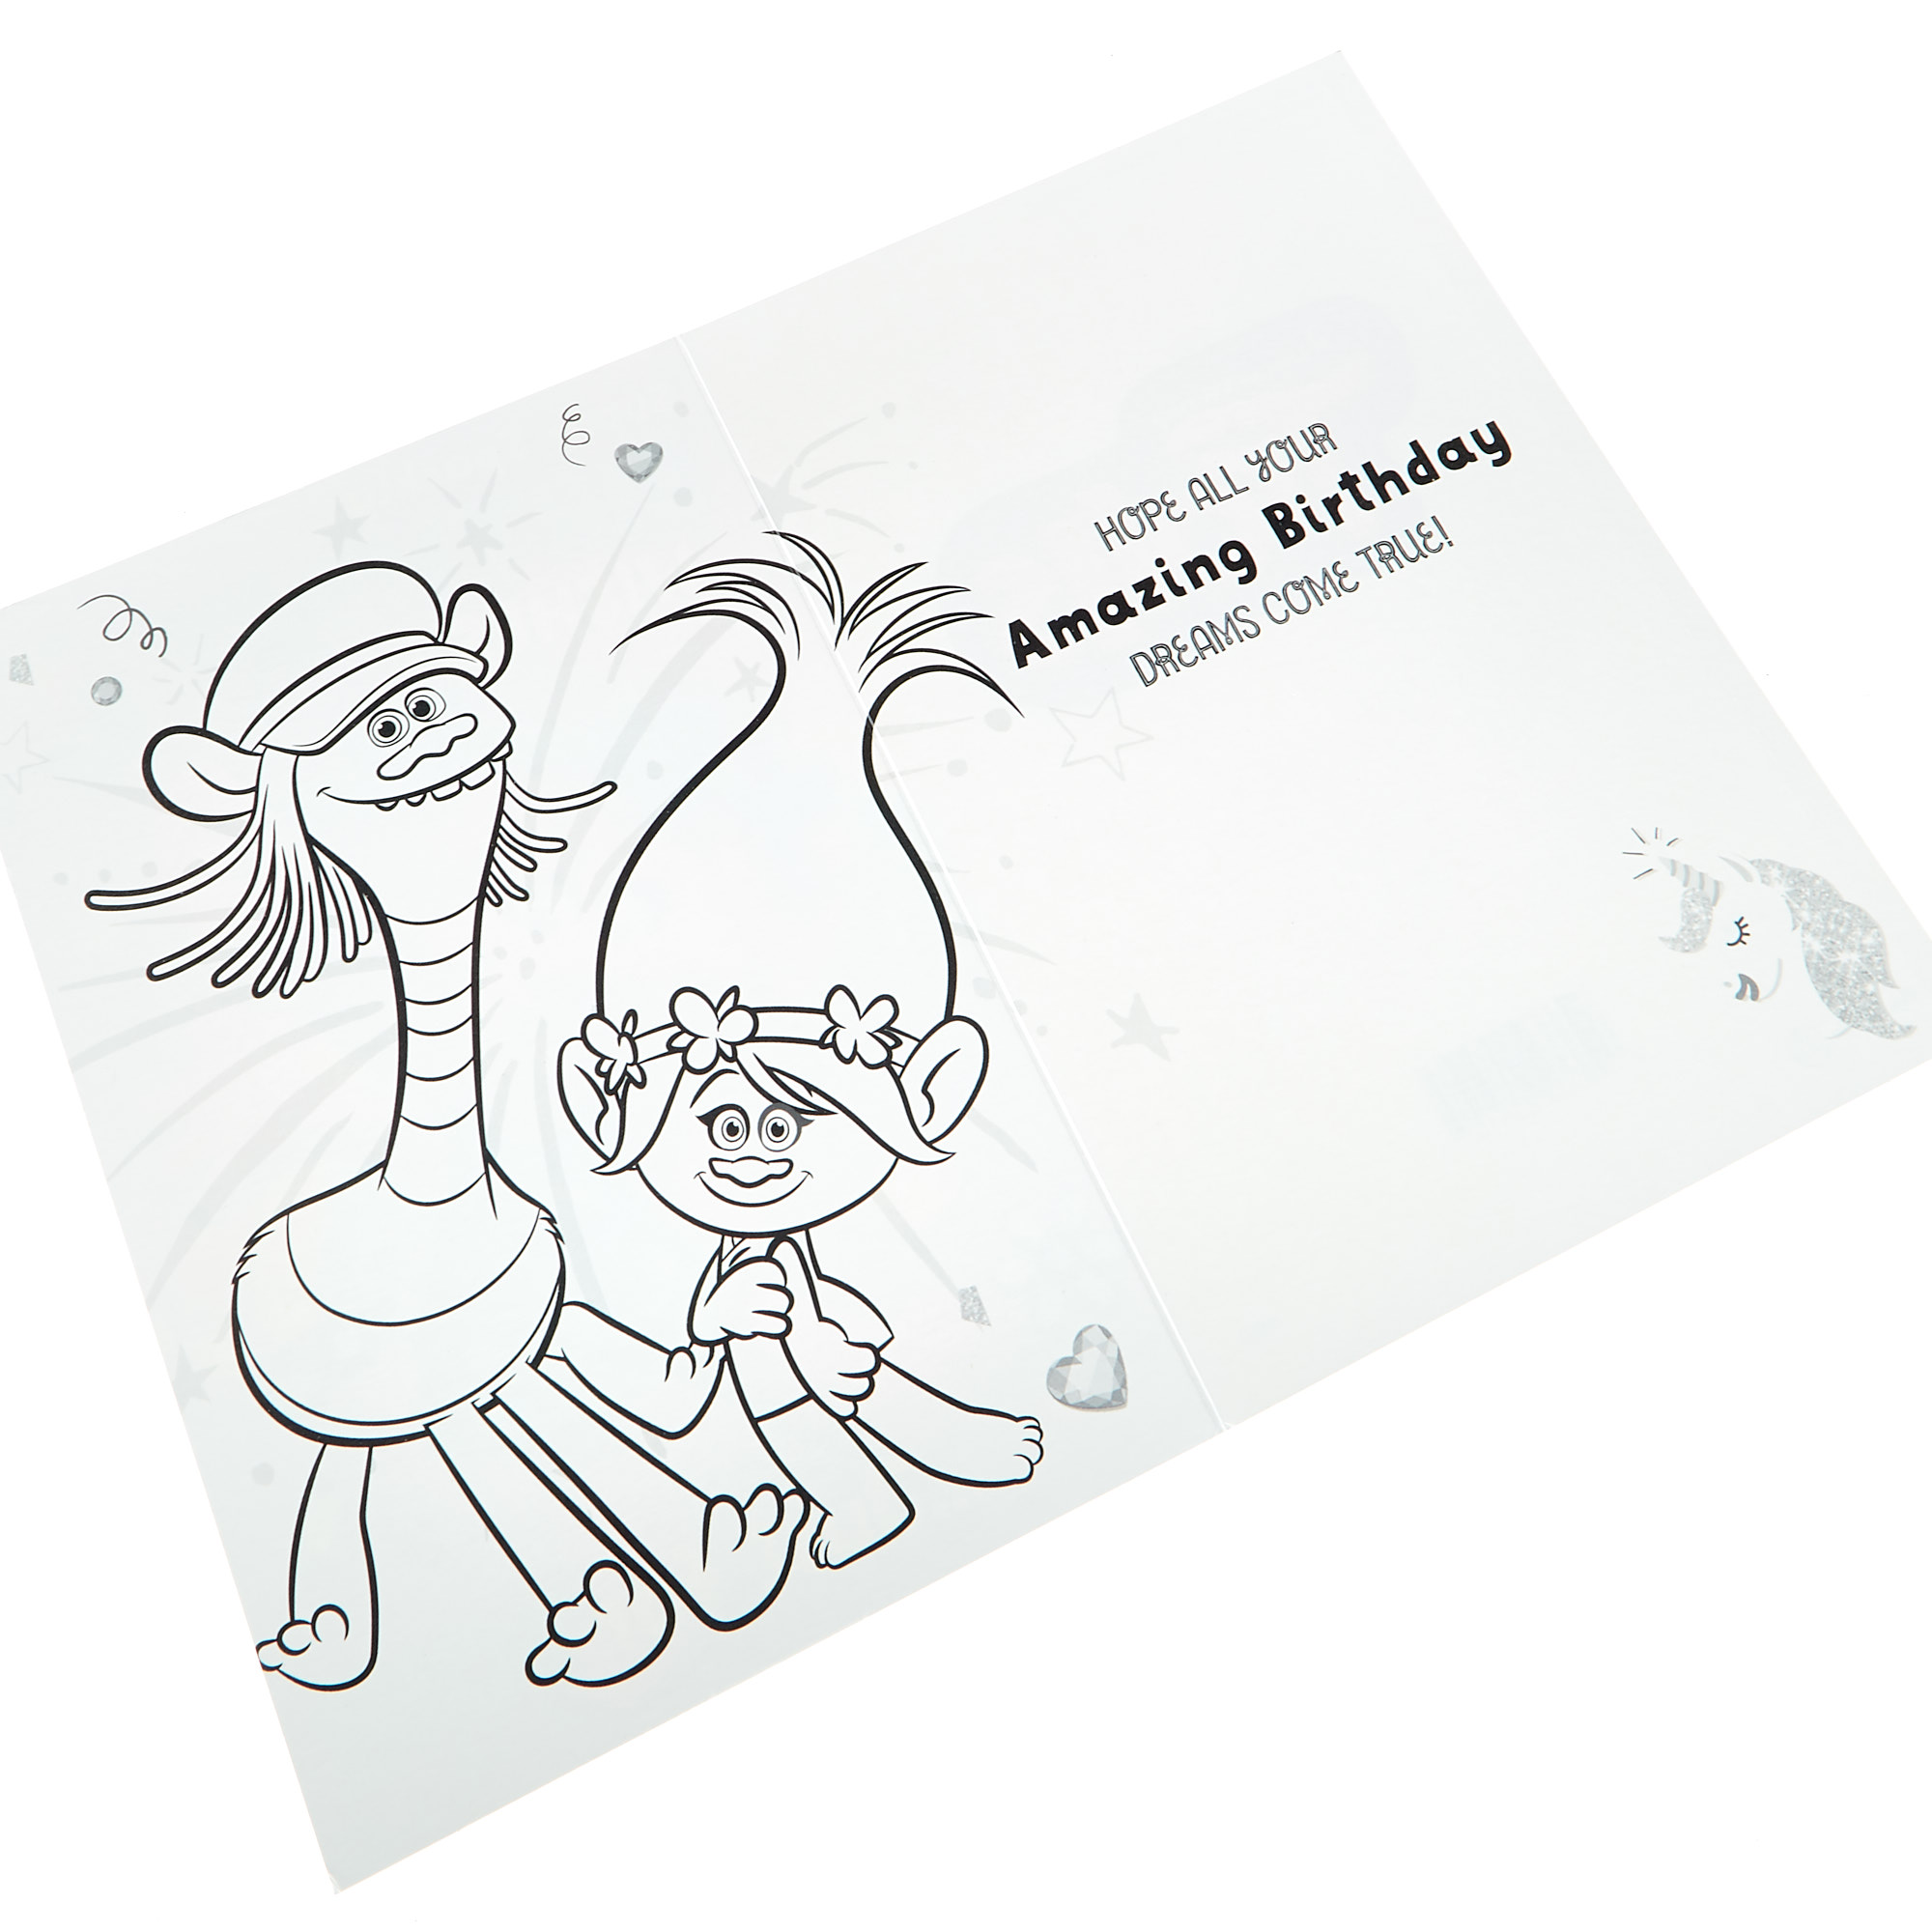 Trolls Birthday Card - Super Sparkly Wishes